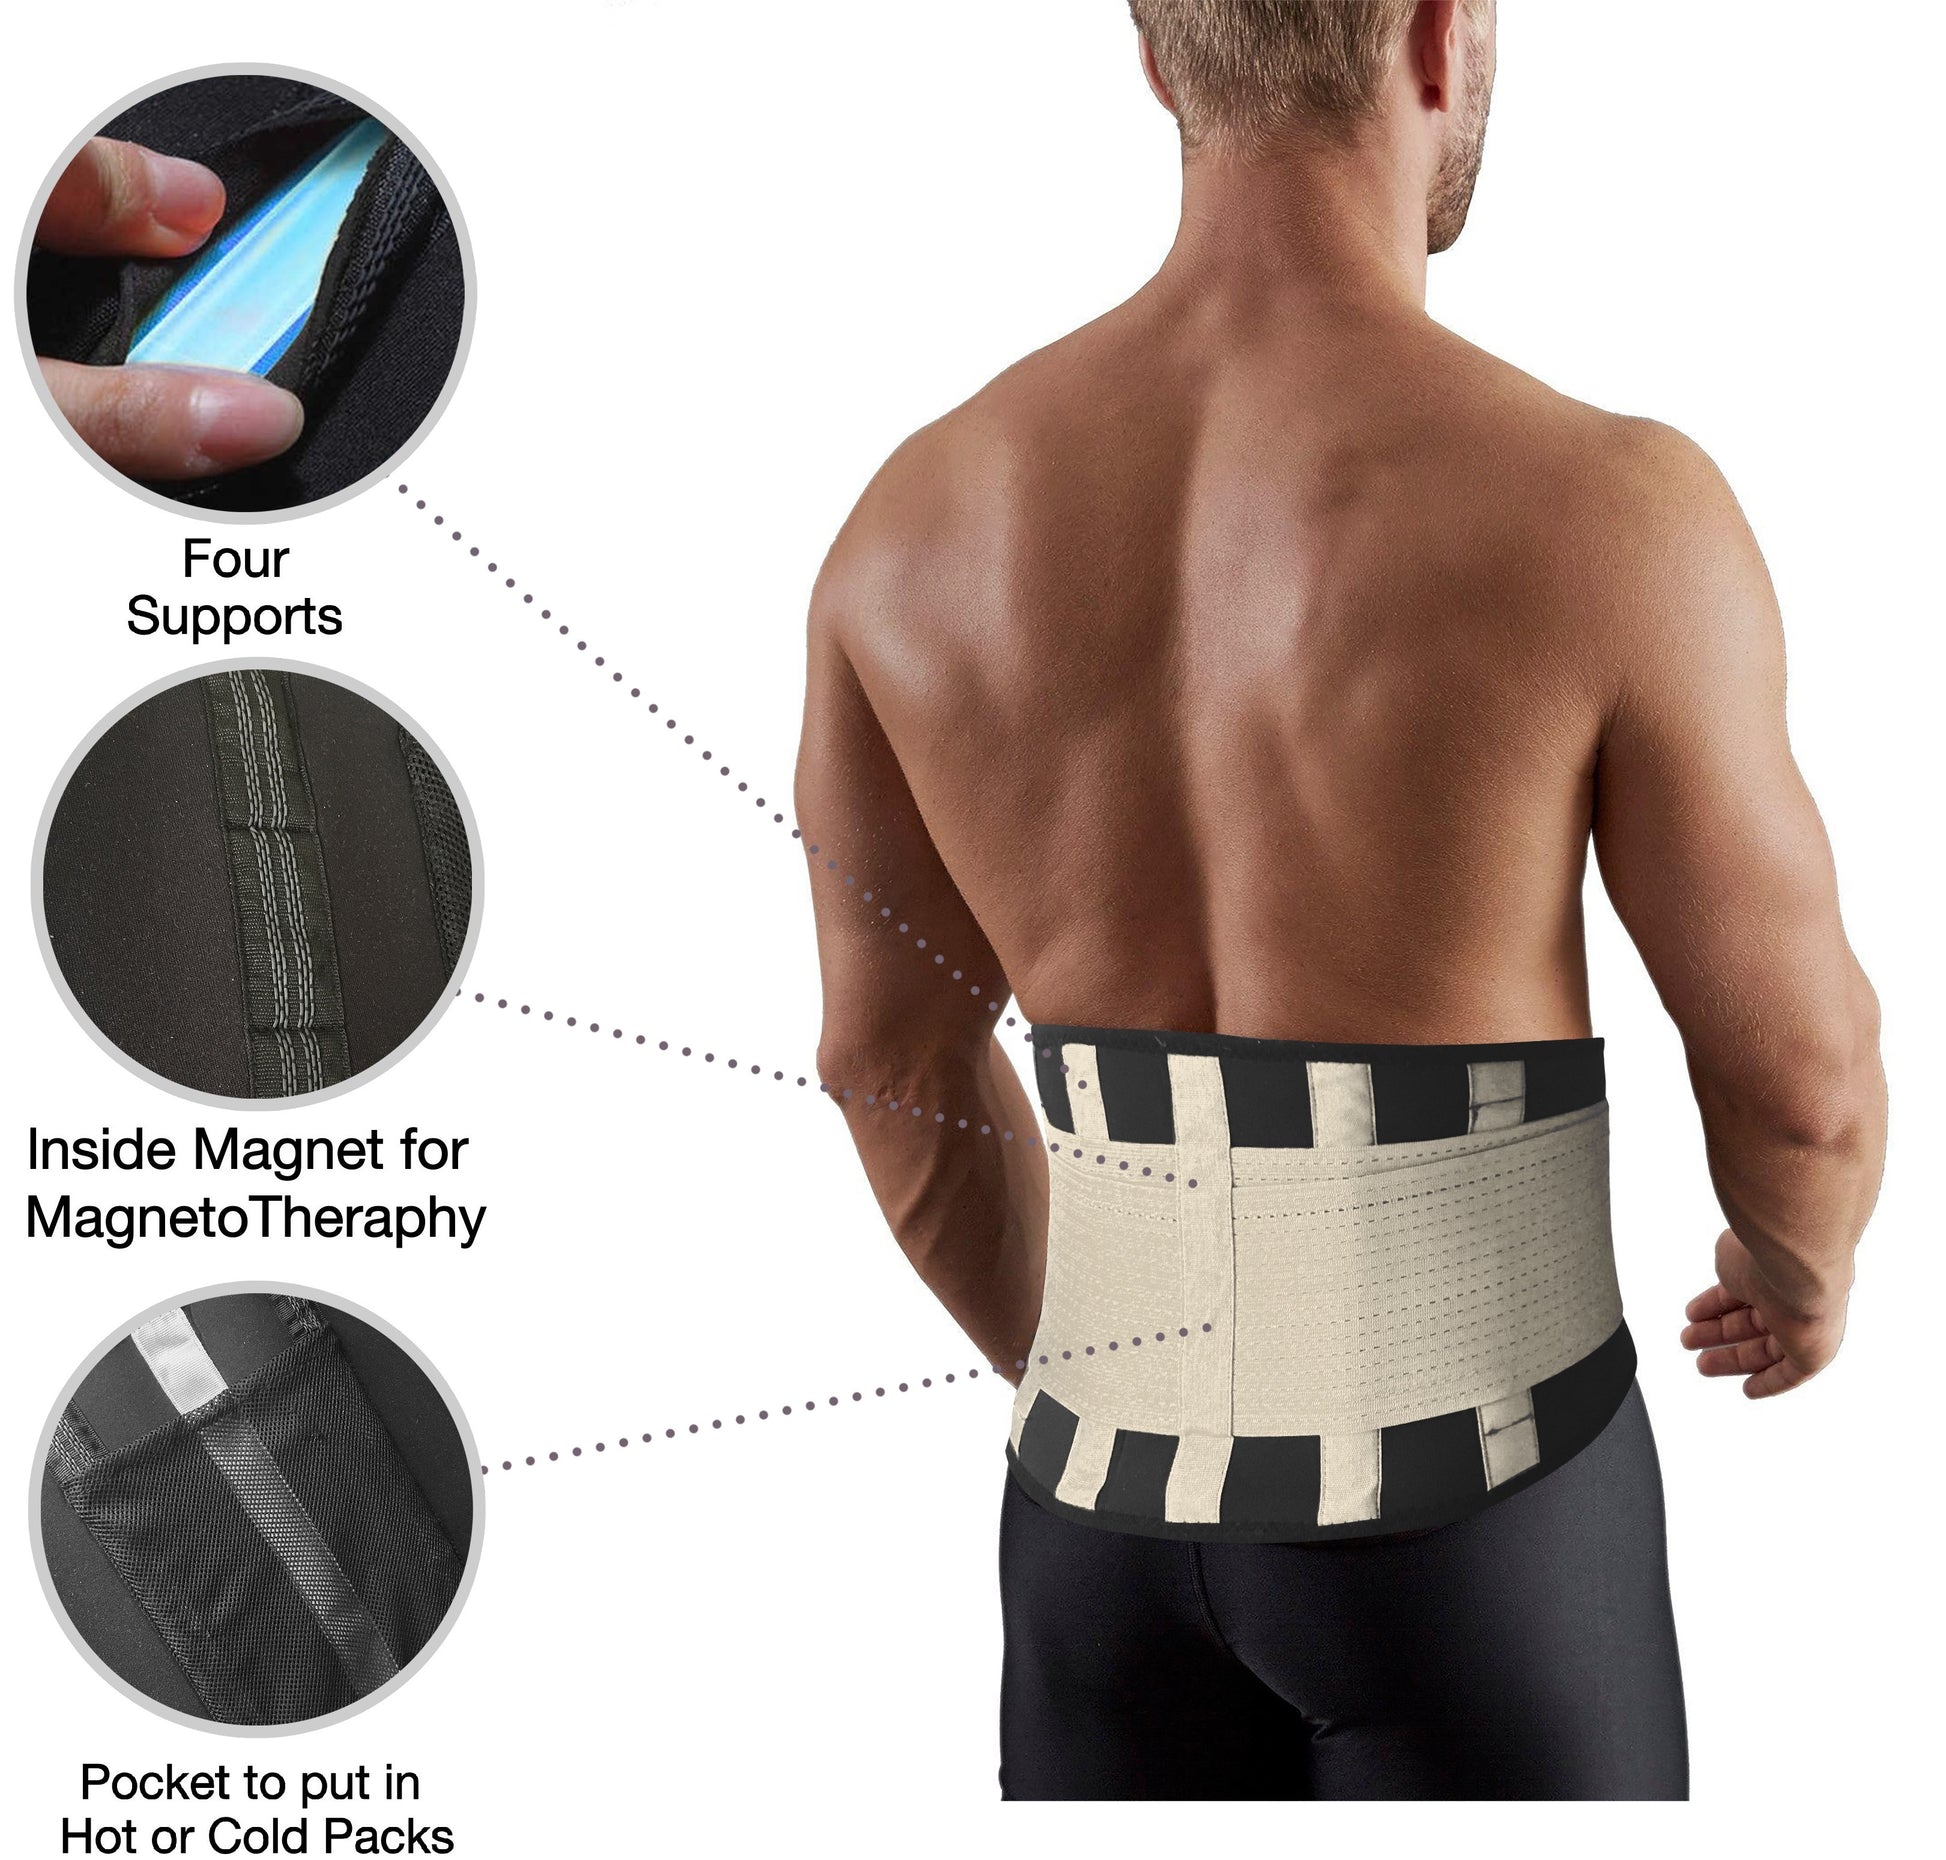 Back Lumbar Support Belt Brace, back pain, lumbar pain product pain relieve Tech Therapeutics. Magnet Therapy solution. Back Support. Relieve back muscle tension.